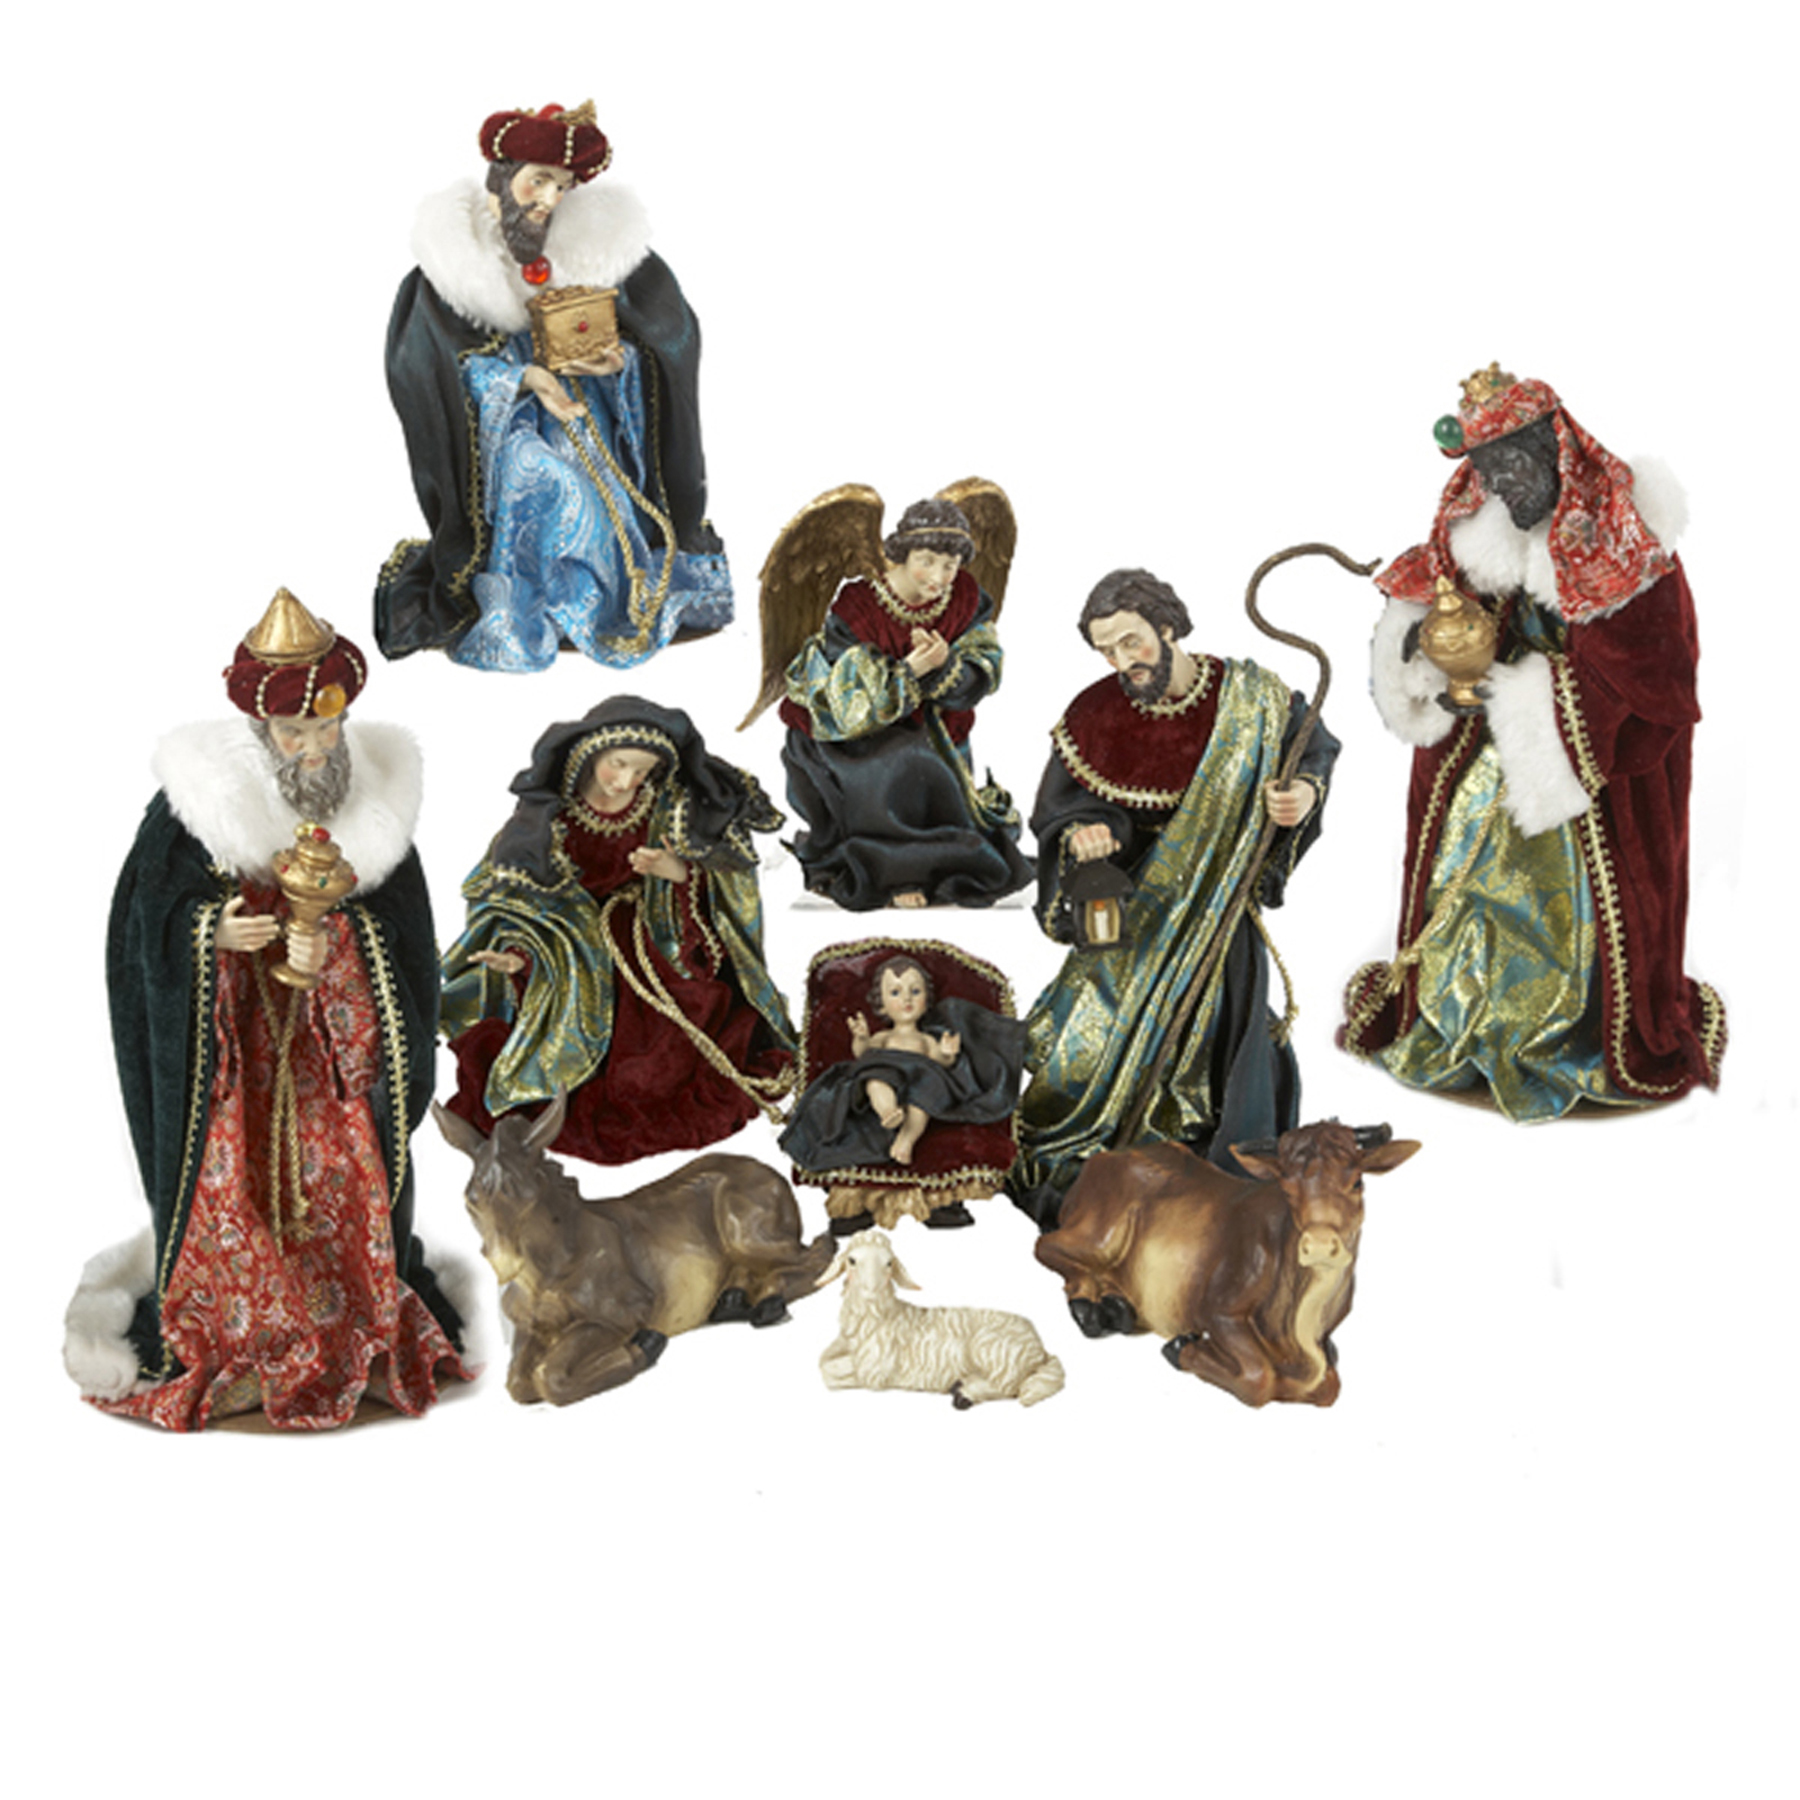 Kurt Adler 13" Resin Dressed Nativity Set of 10 Figures Christmas Decoration